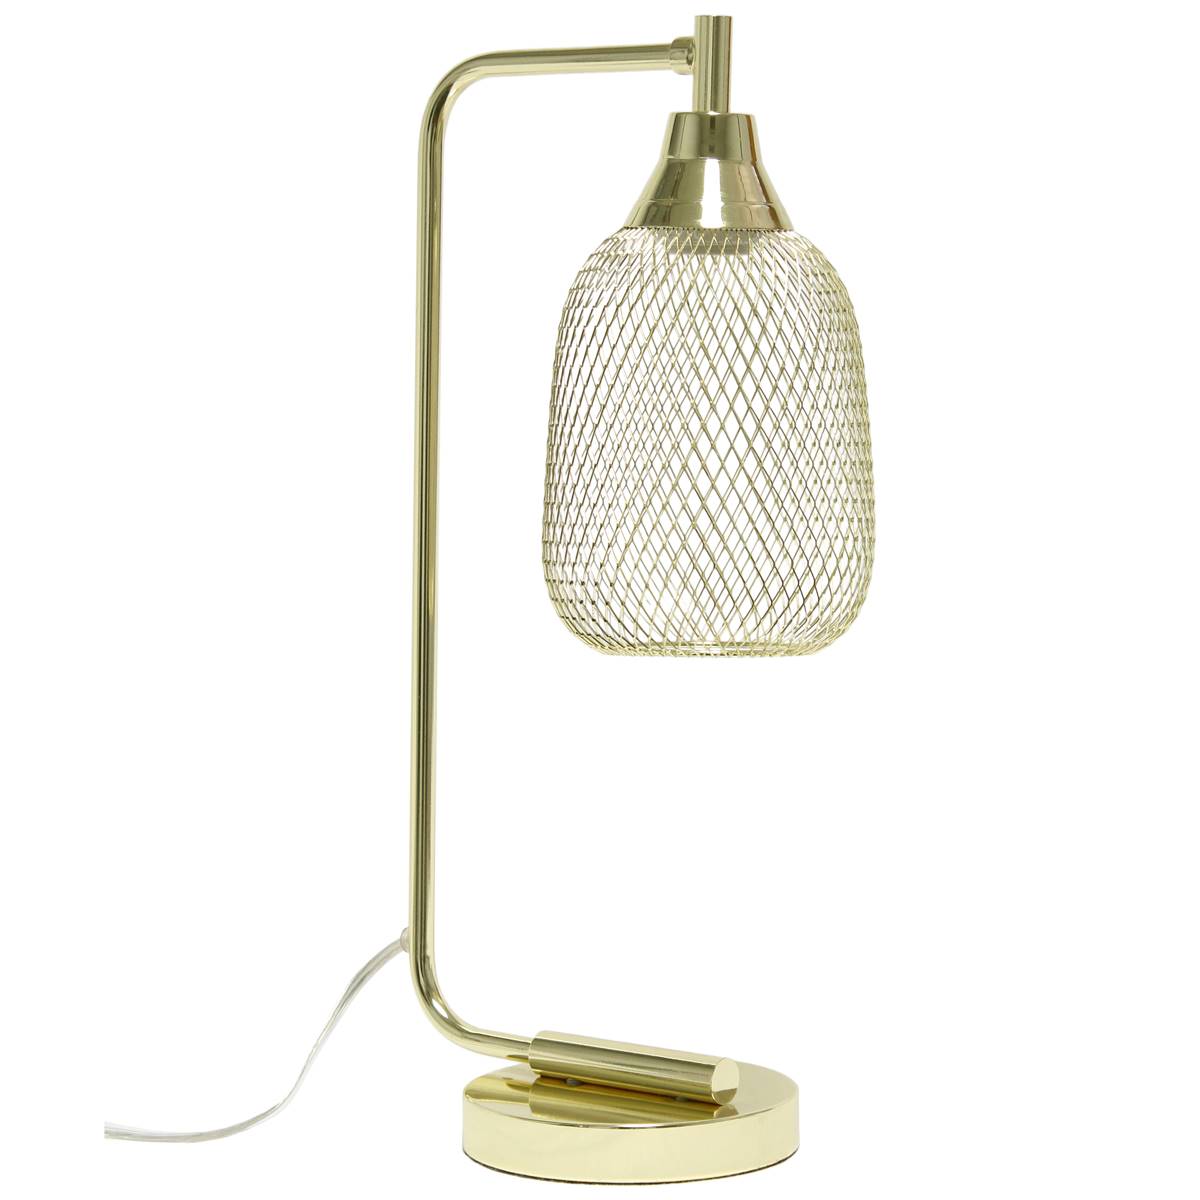 Lalia Home Studio Loft Industrial Polished Mesh Desk Lamp